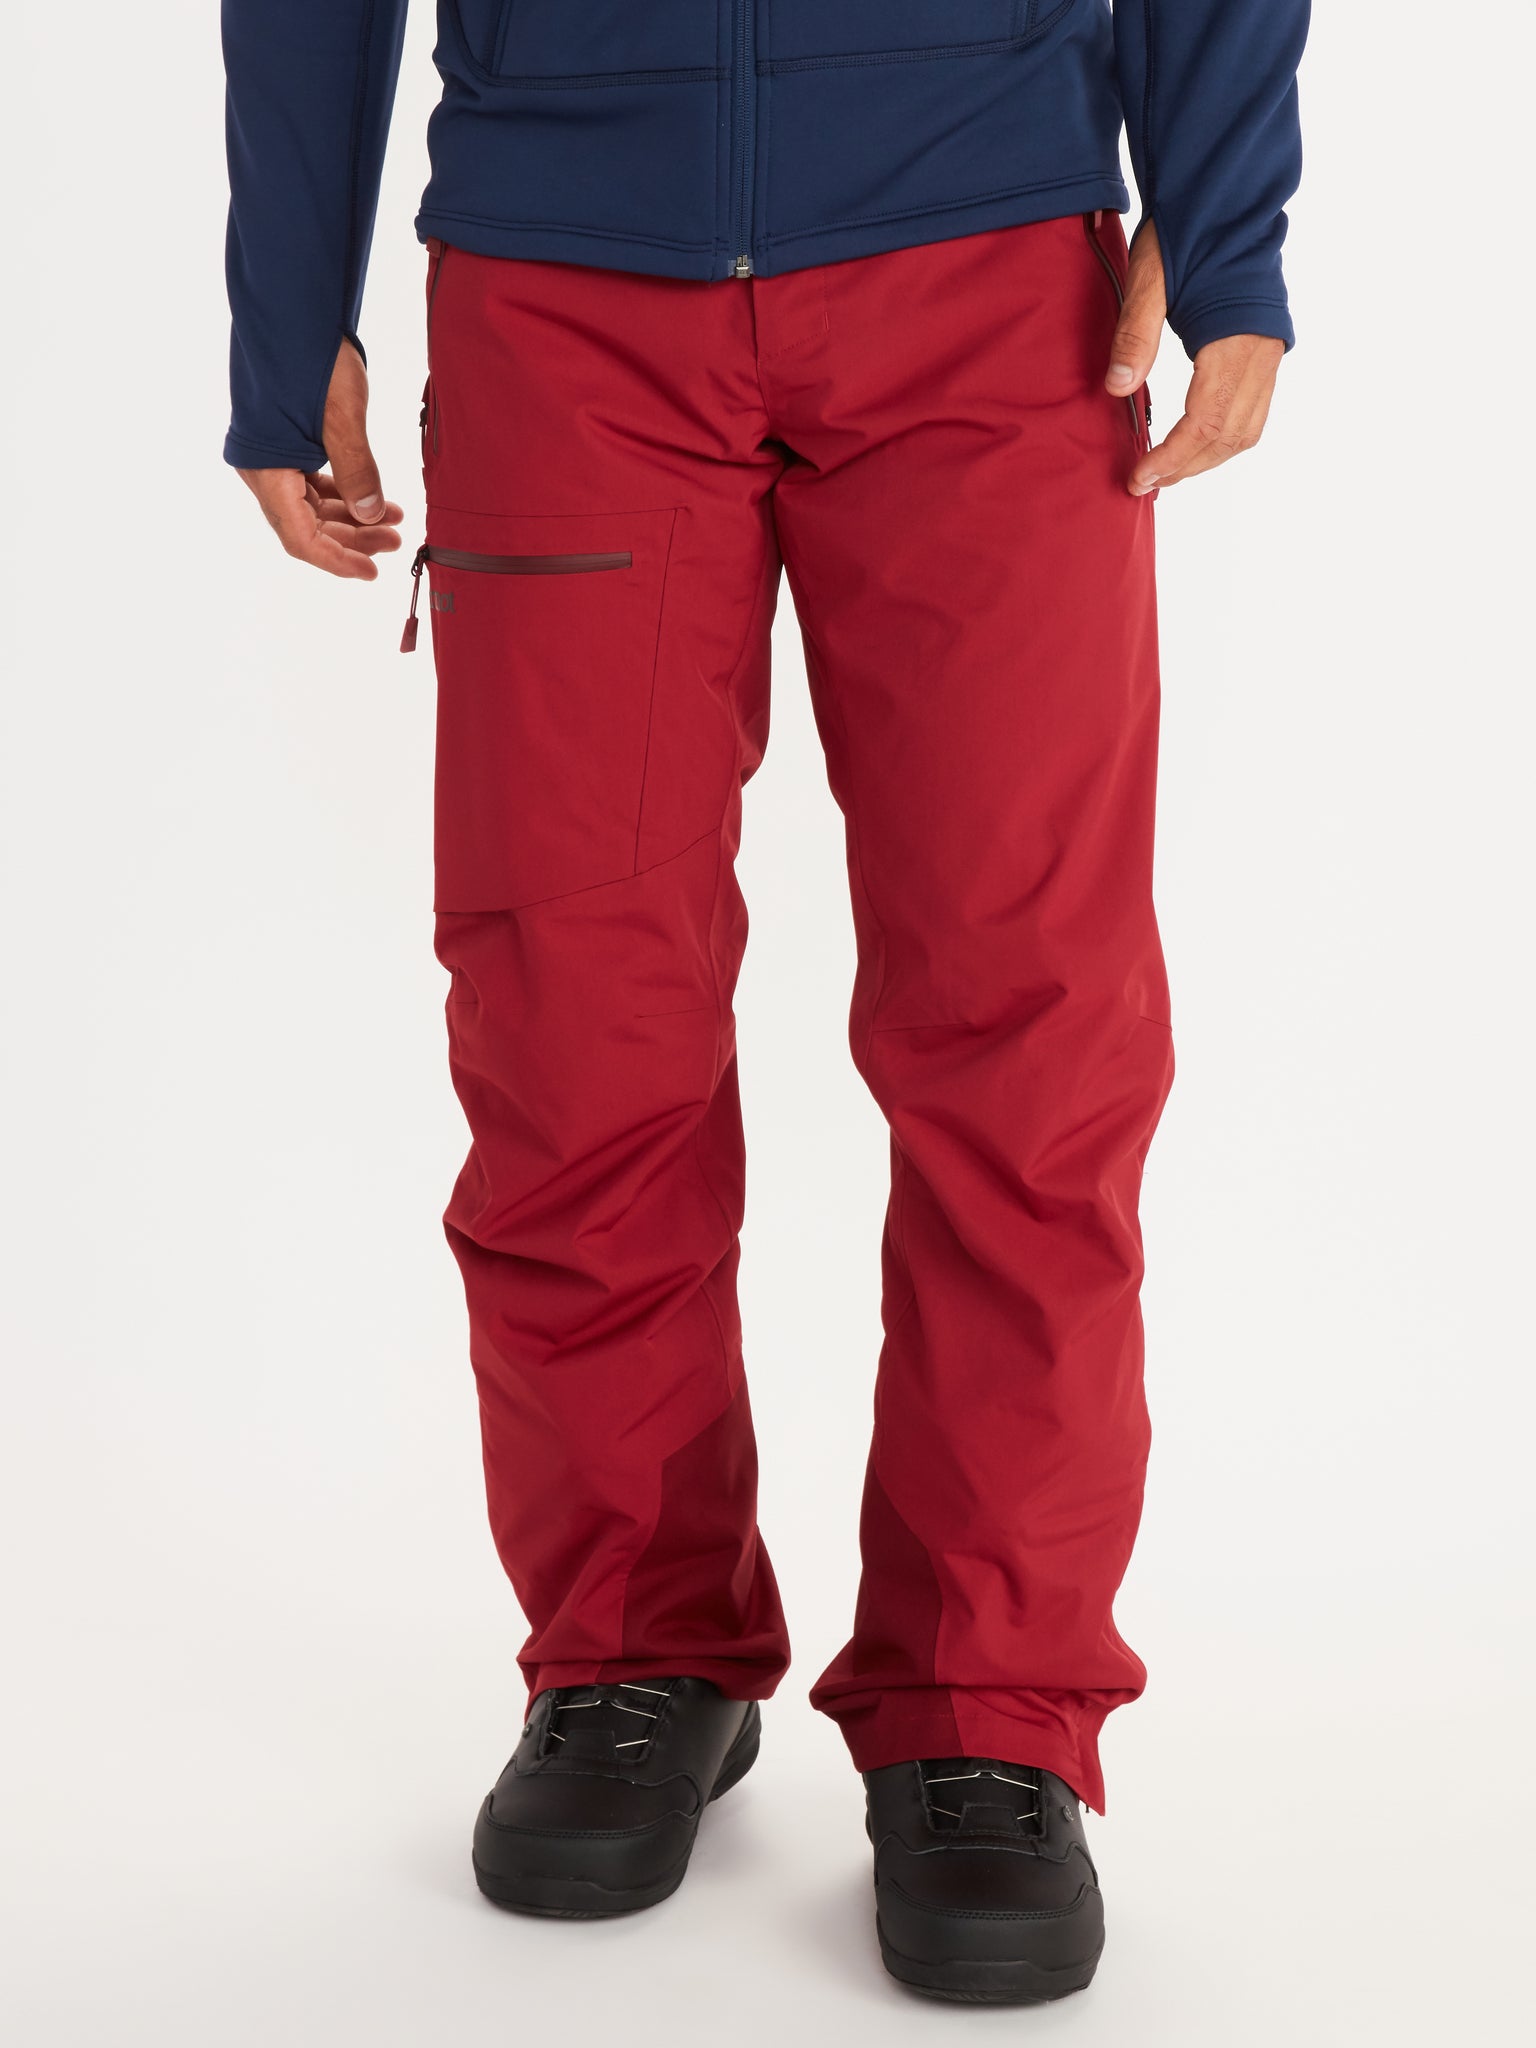 Marmot Refuge Pant - Men's backcountry ski pants